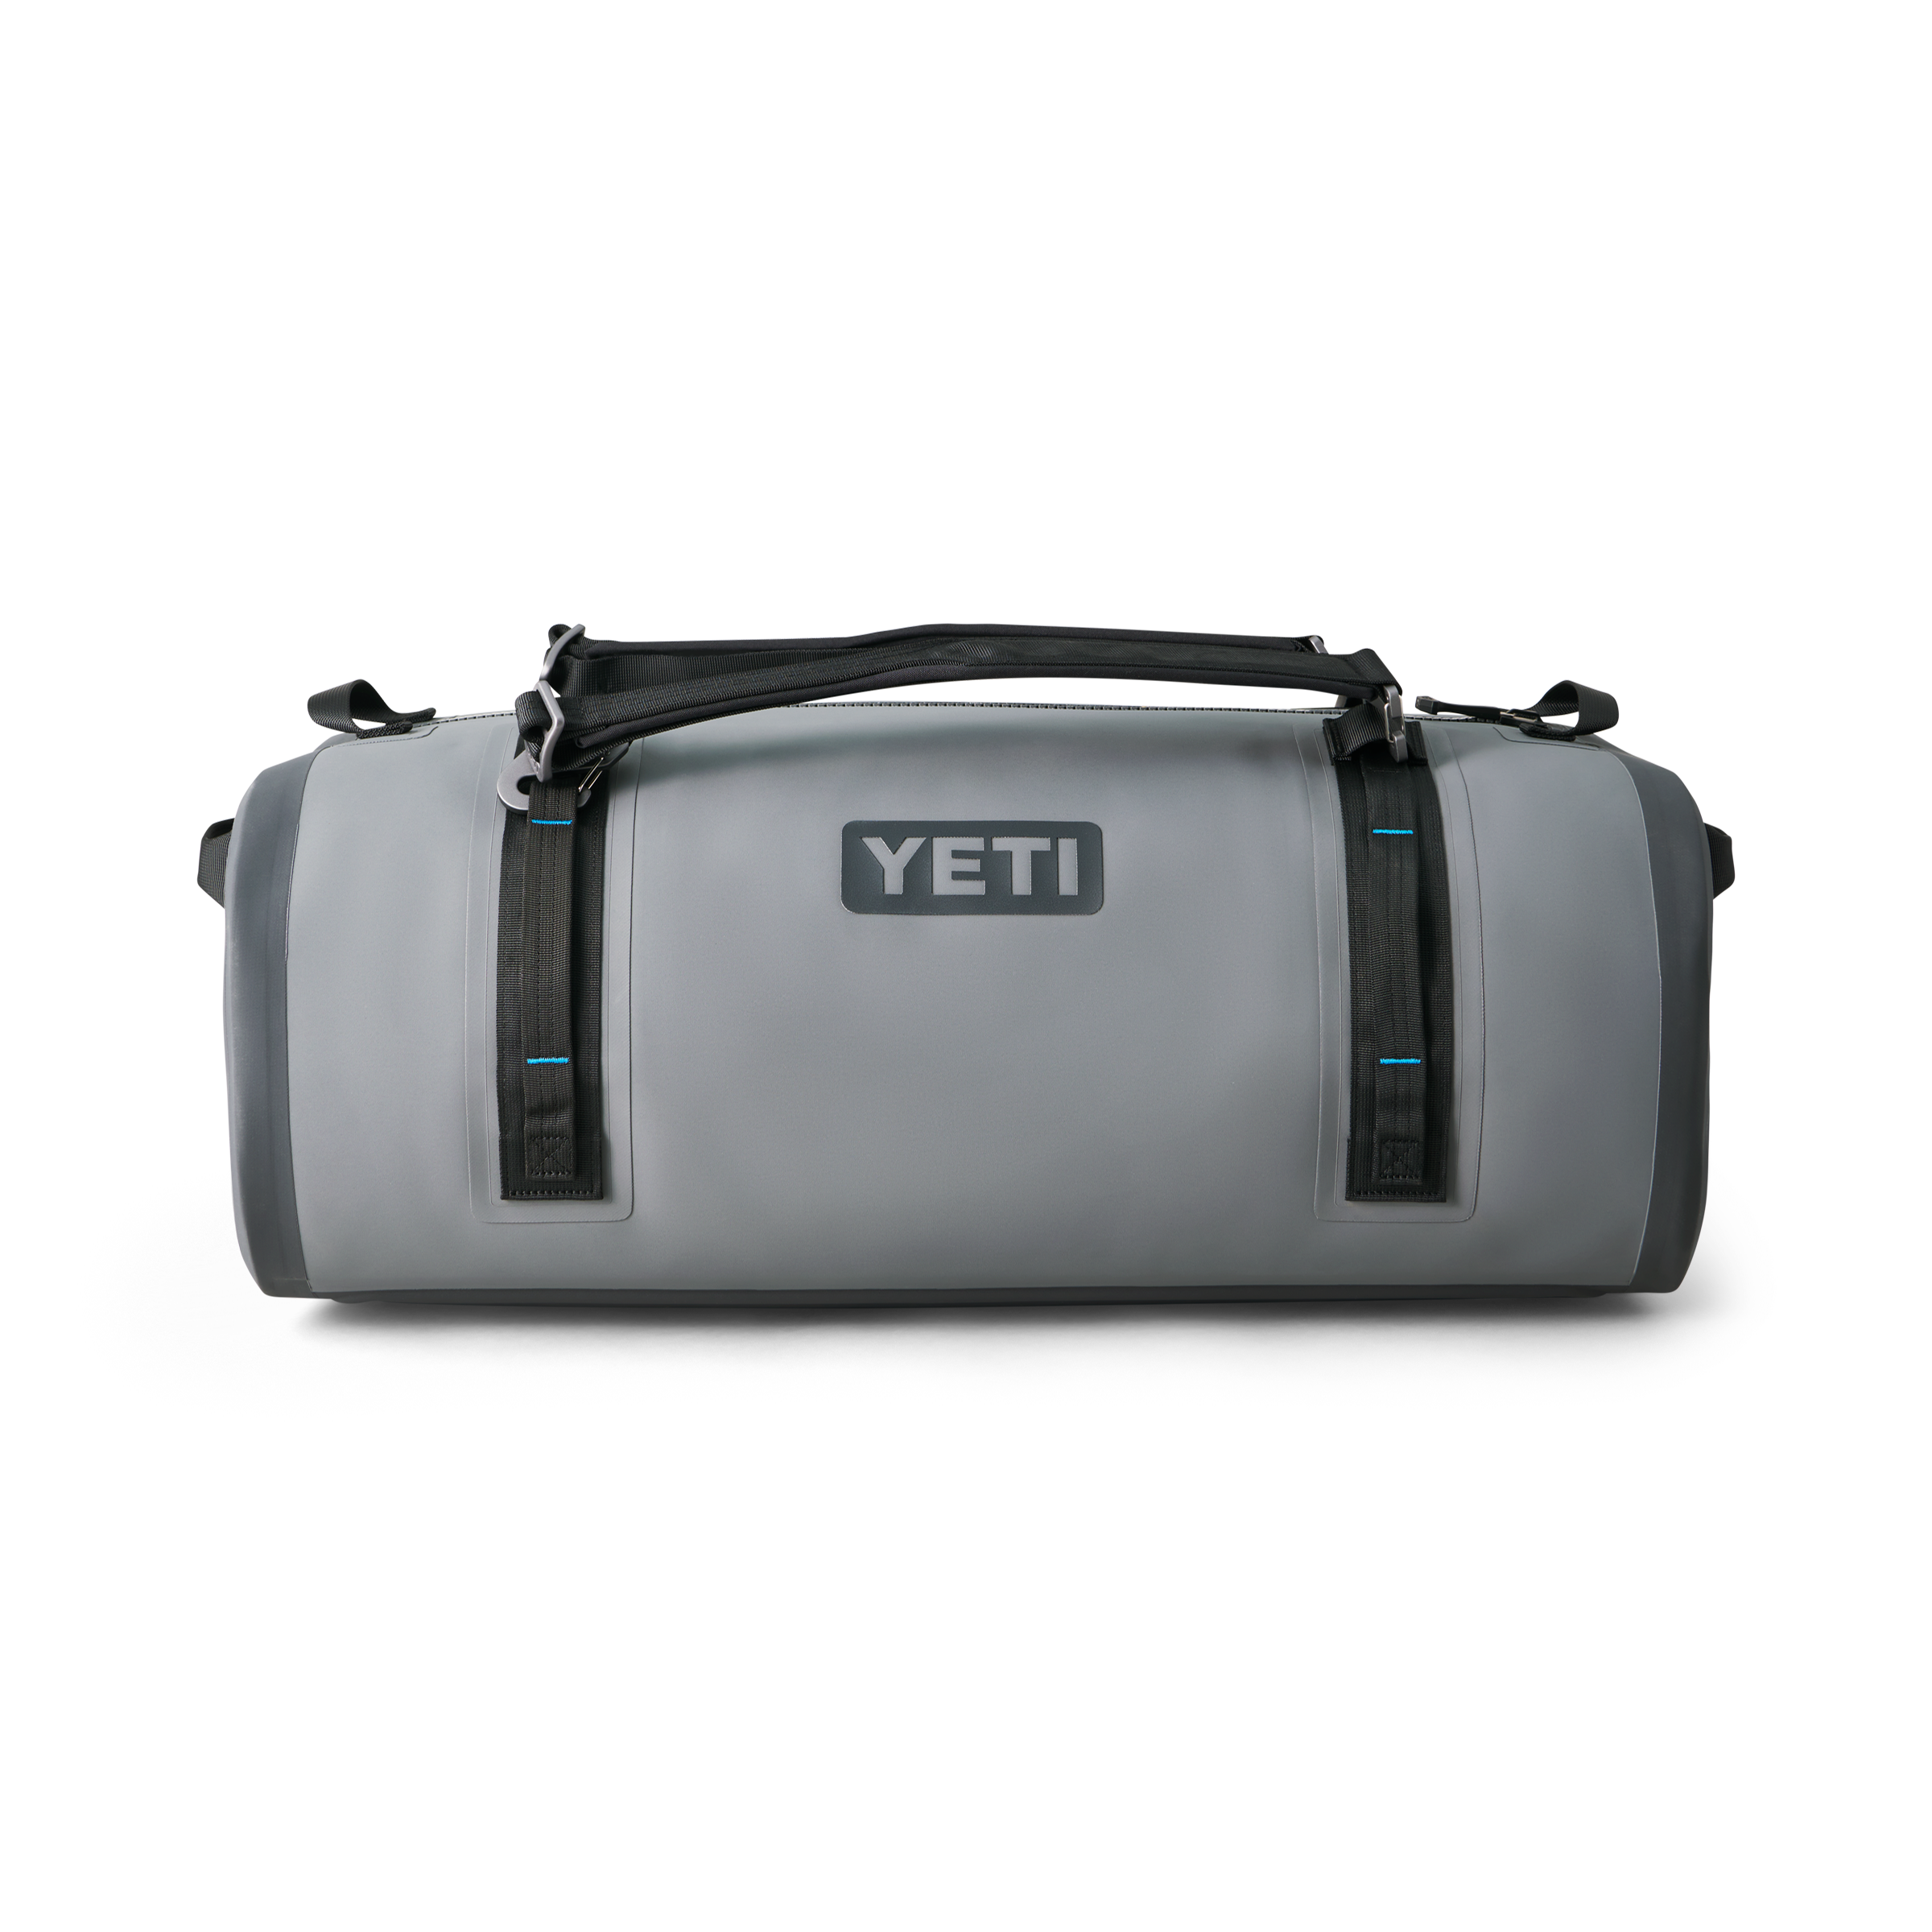 Yeti Hopper M30 Cooler Review 2020